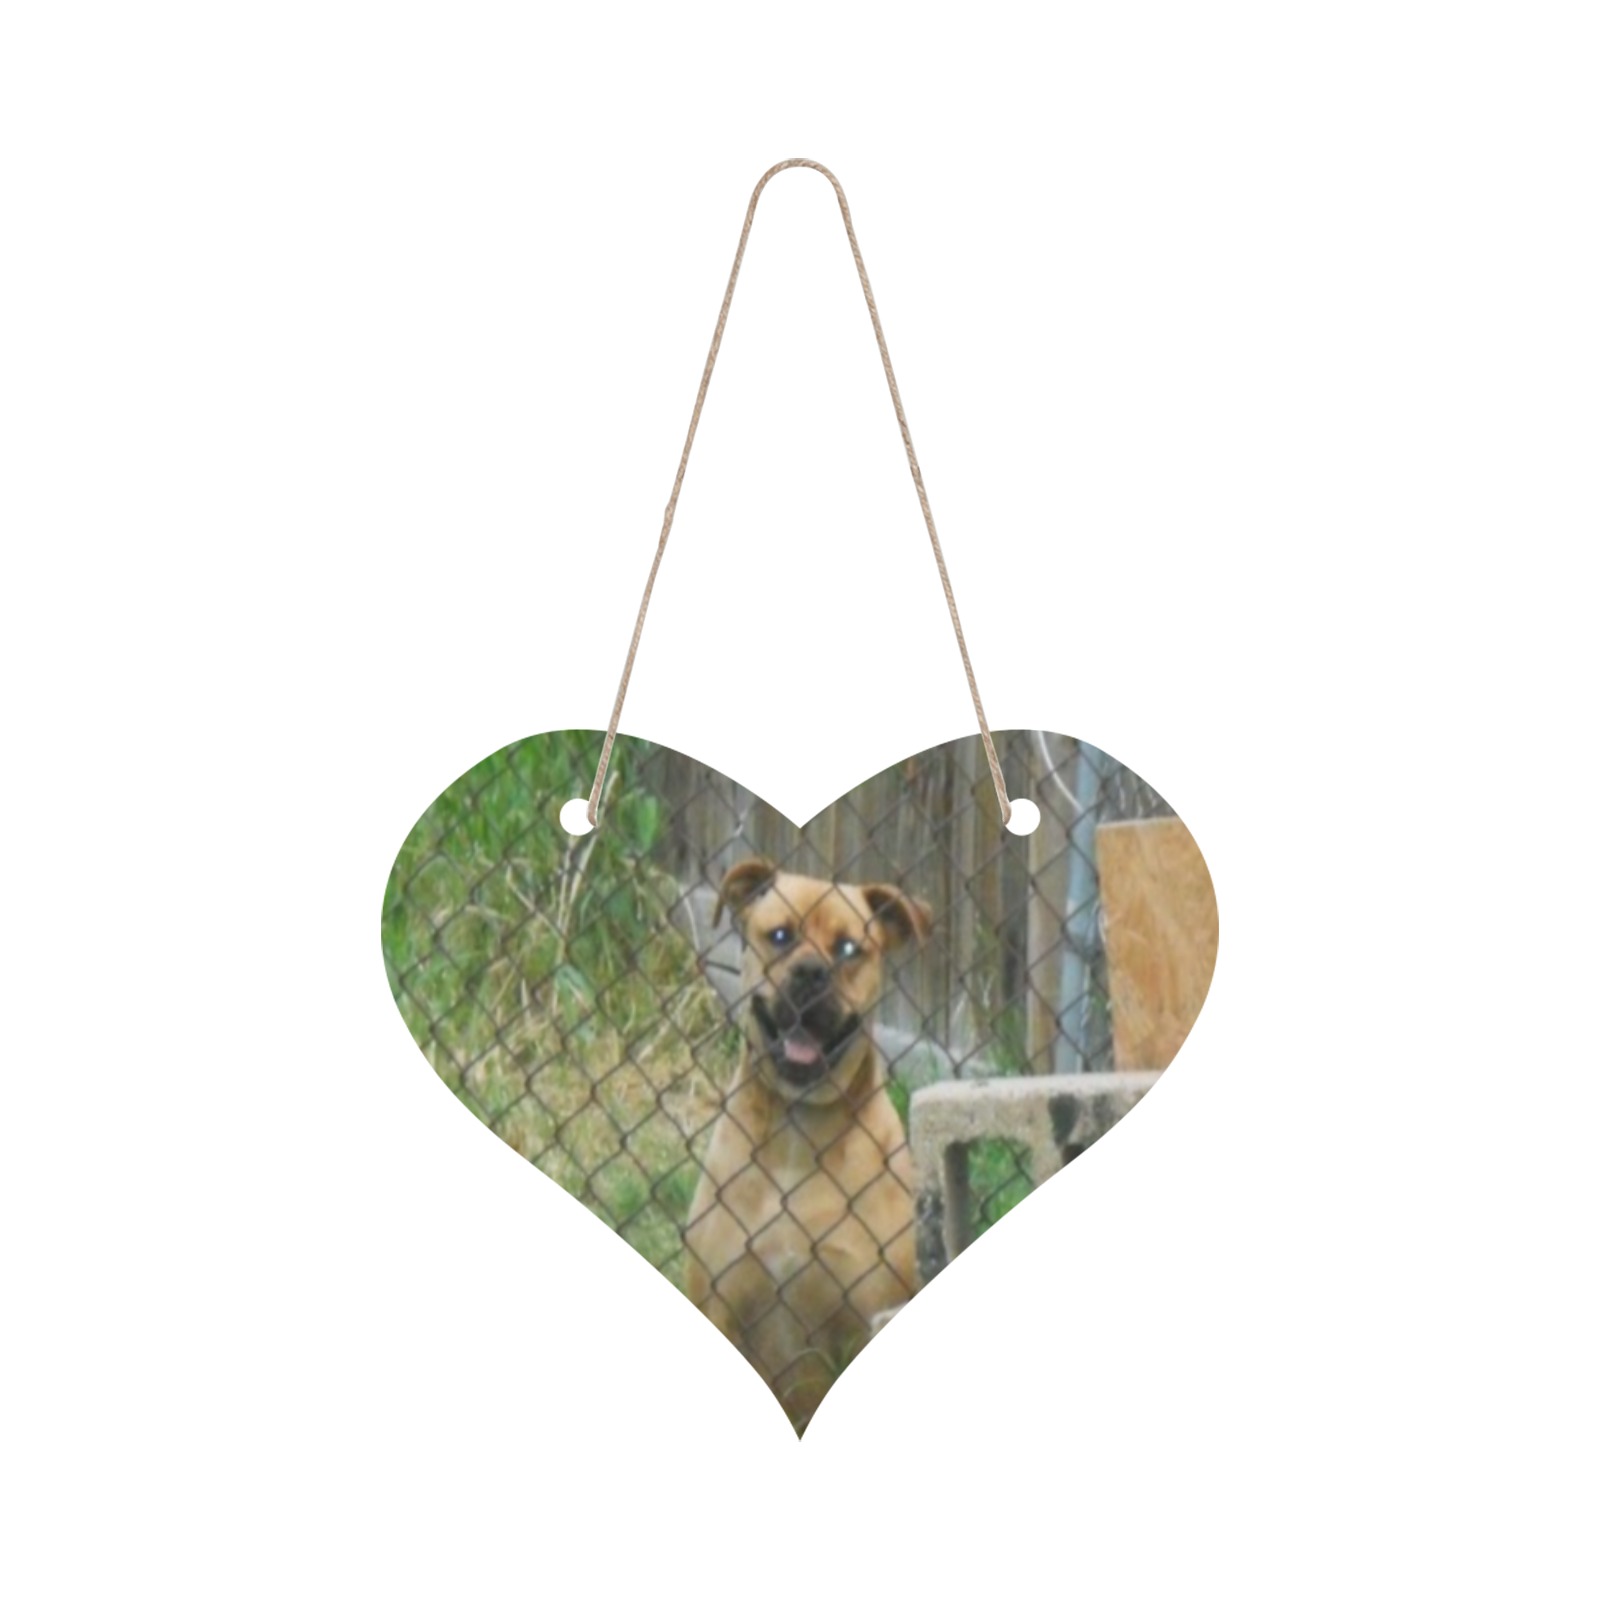 A Smiling Dog Heart Wood Door Hanging Sign